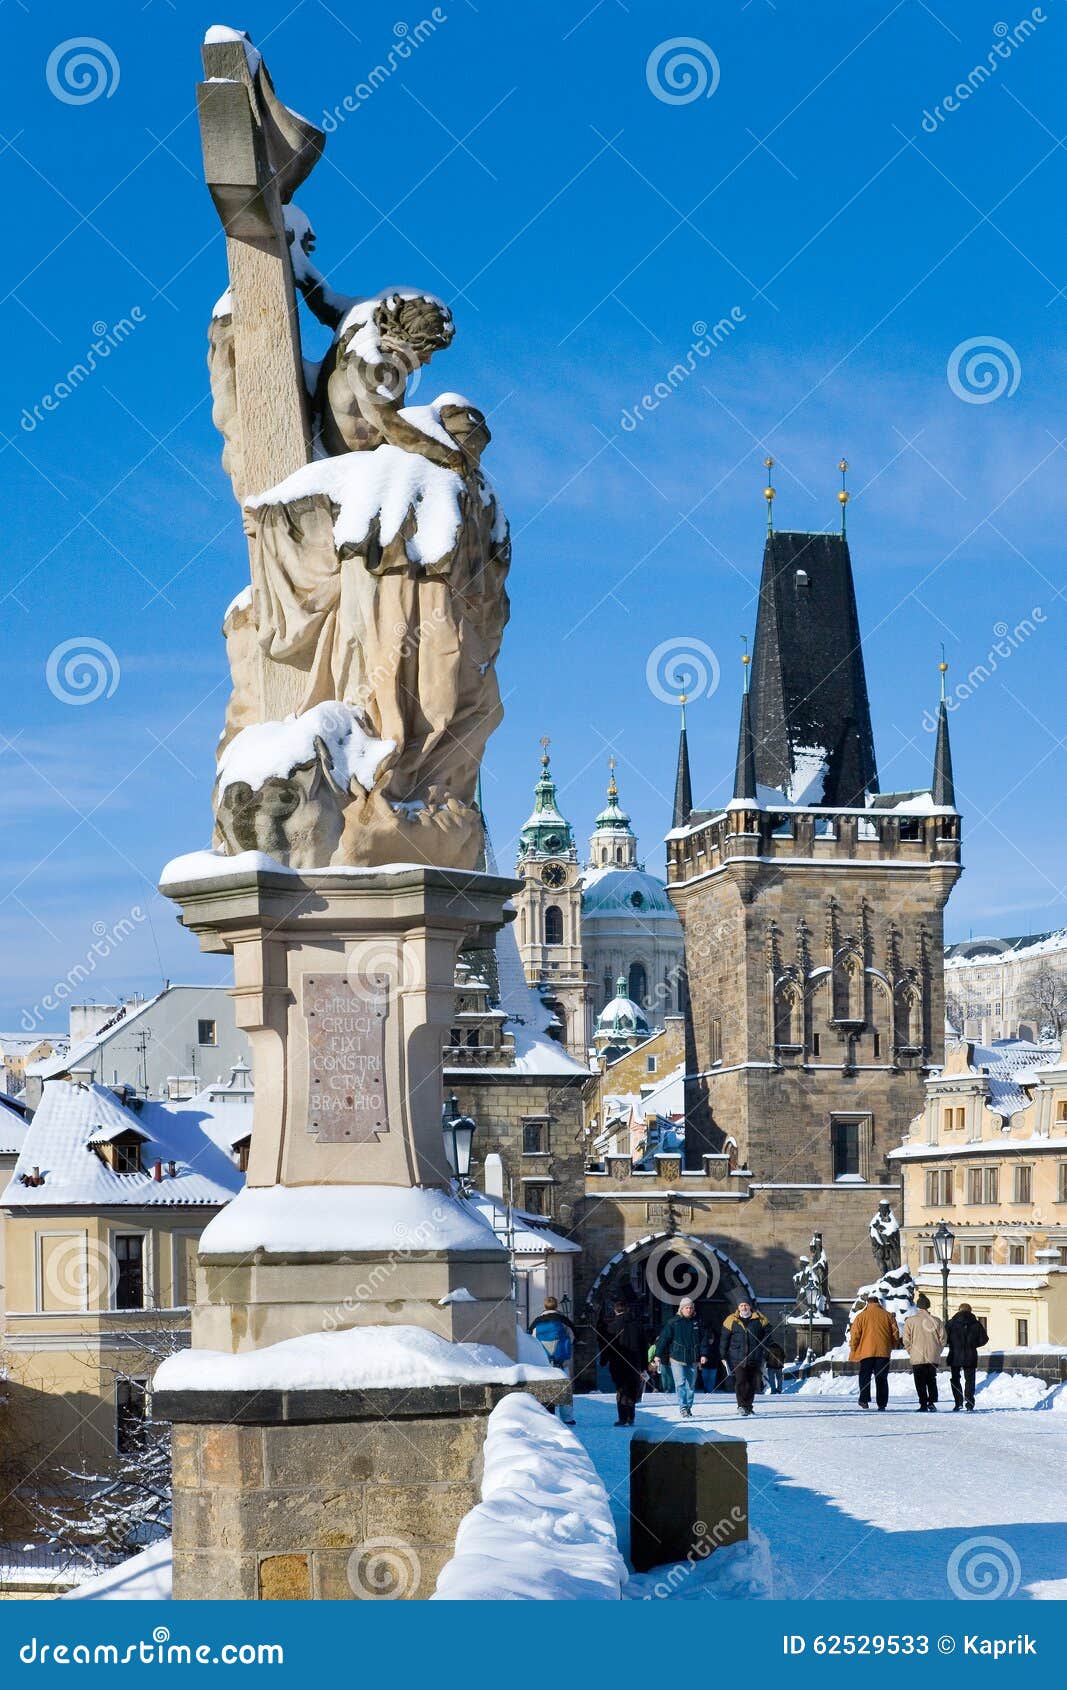 Prague castle and Charles bridge, Prague (UNESCO), Czech republic. ΠΡΑΓΑ, ΔΗΜΟΚΡΑΤΊΑ ΤΗΣ ΤΣΕΧΊΑΣ - 25 ΙΑΝΟΥΑΡΊΟΥ 2012: Κάστρο της Πράγας και γέφυρα του Charles πέρα από τον ποταμό Moldau, μικρότερη πόλης περιοχή στην Πράγα, Τσεχία Προστατευμένος από την ΟΥΝΕΣΚΟ, εθνικό πολιτιστικό ορόσημο